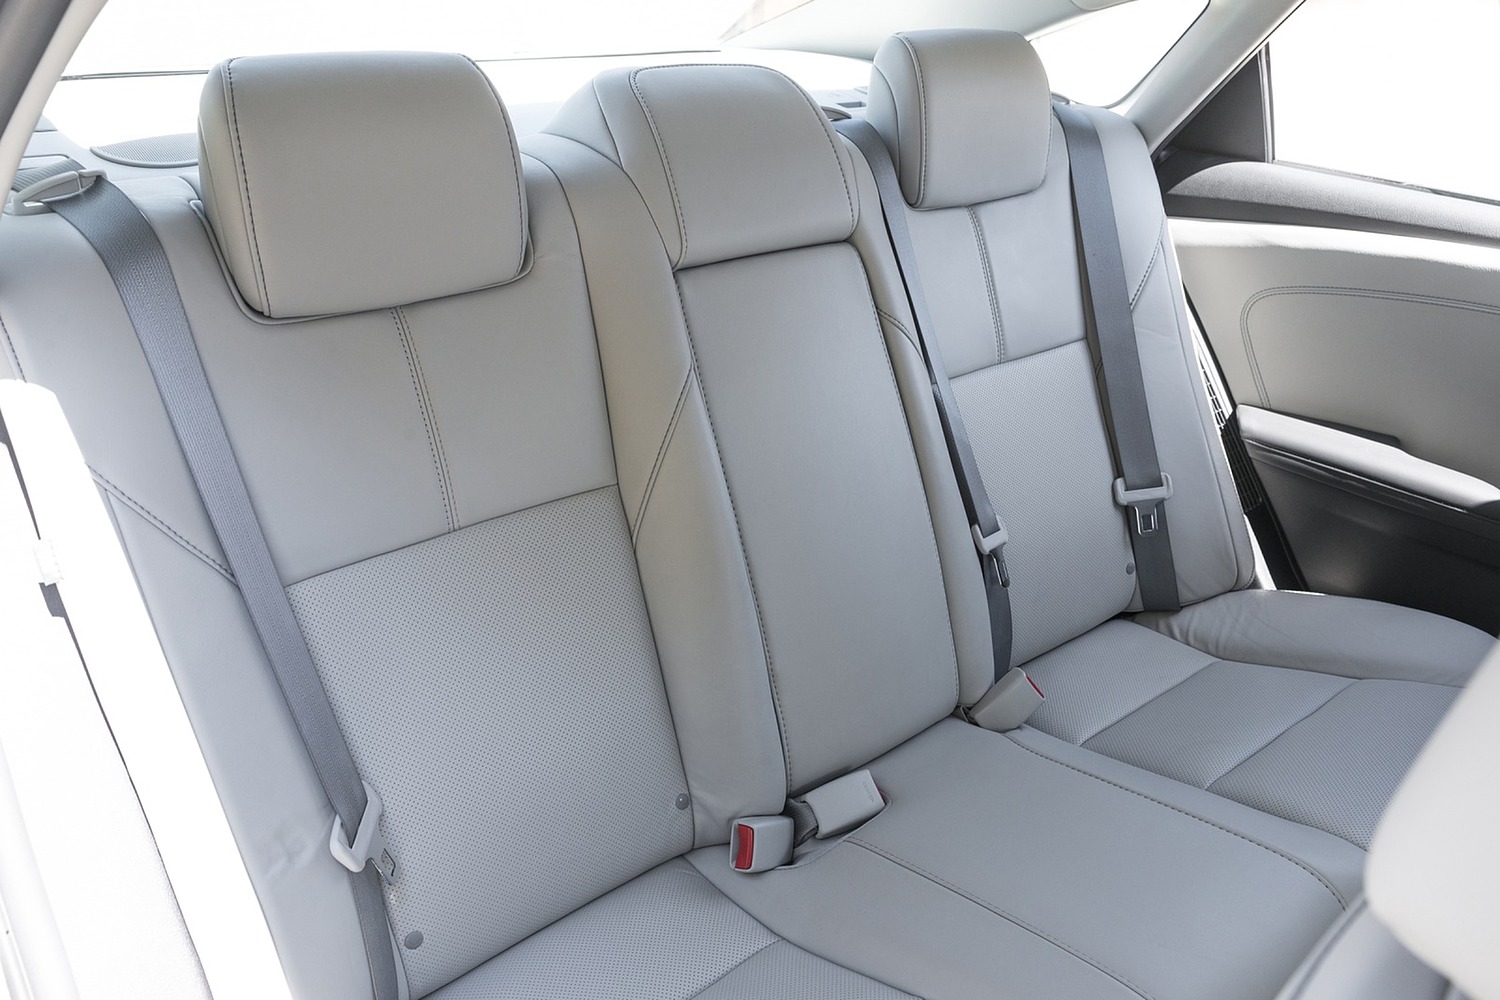 Toyota Avalon Hybrid Sedan Rear Interior (2017 model year shown)